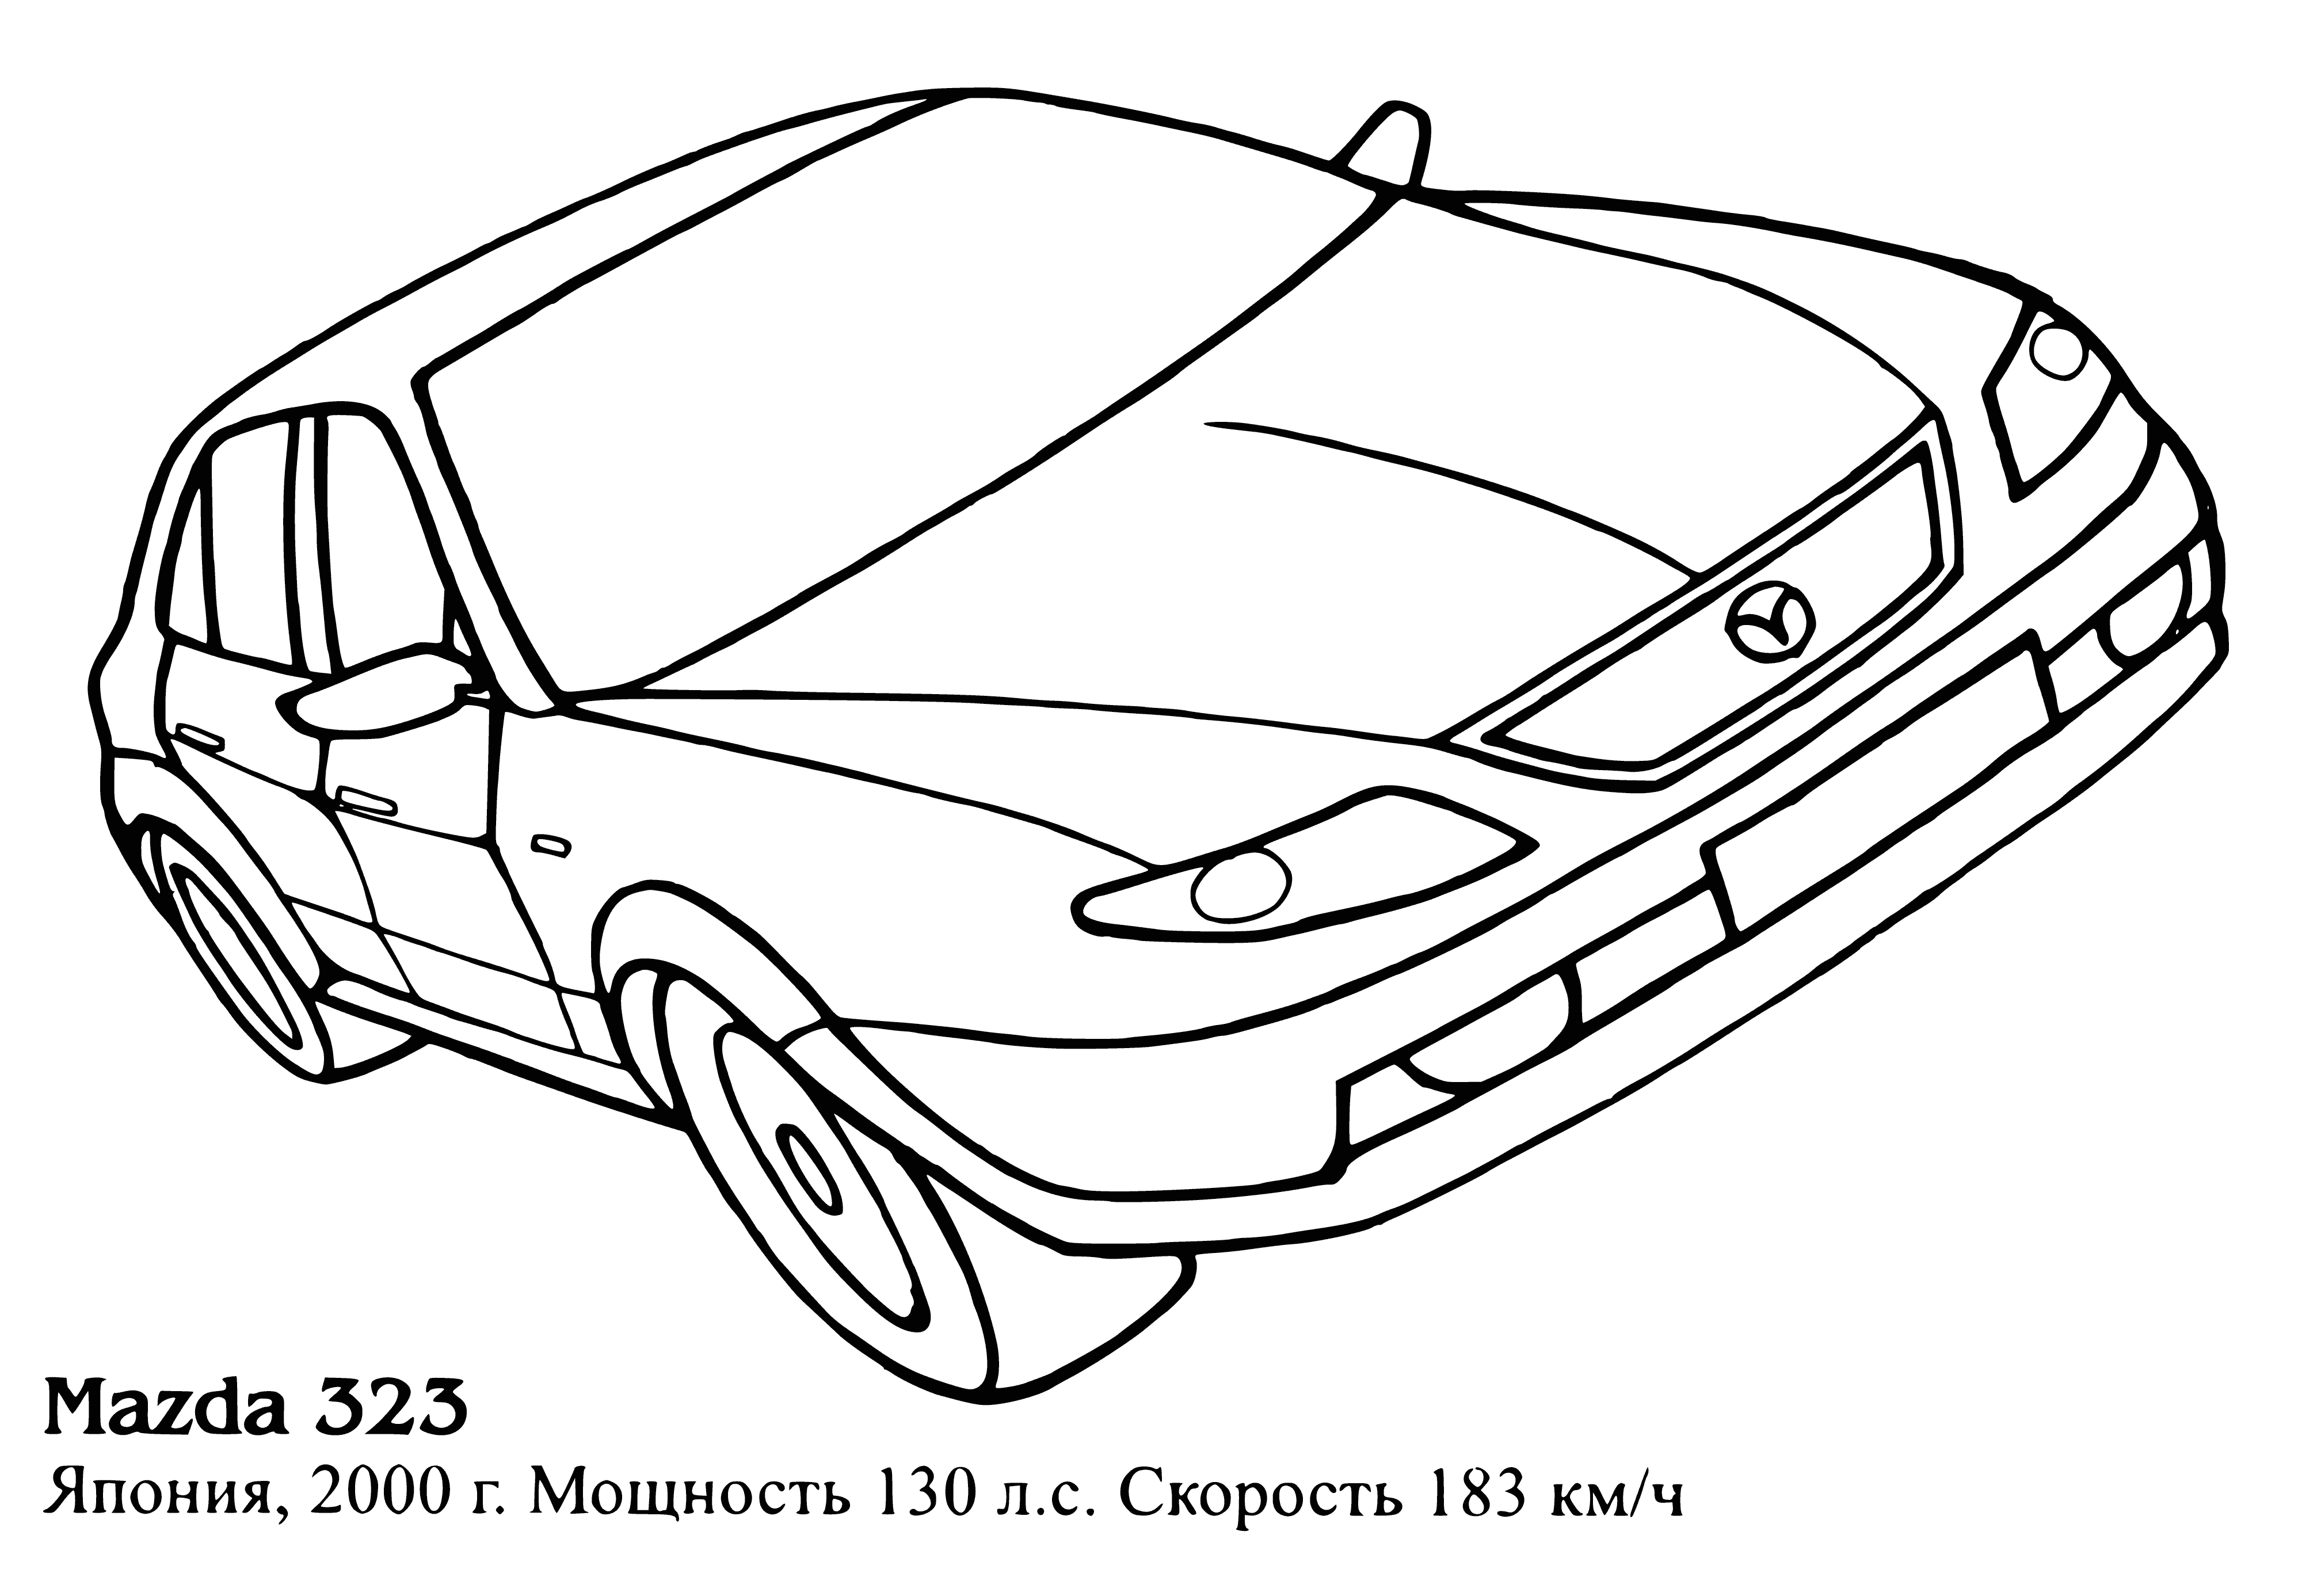 Mazda 323 kolorowanka